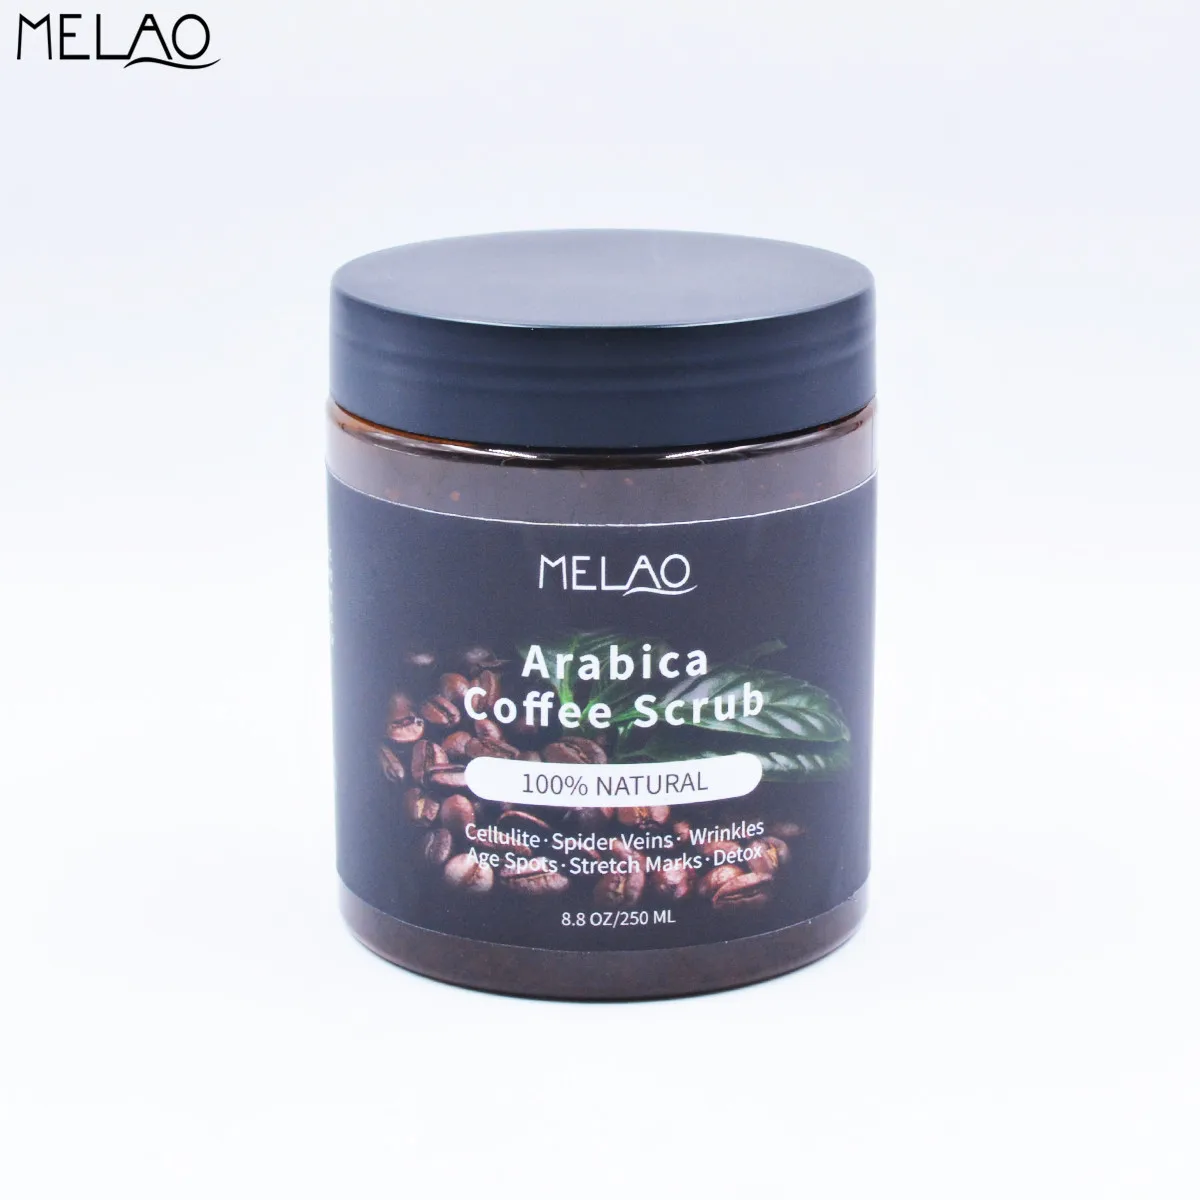 

MELAO Coffee Scrub Body Scrub Cream Facial Dead Sea Salt For Exfoliating Whitening Moisturizing Anti Cellulite Treatment Acne